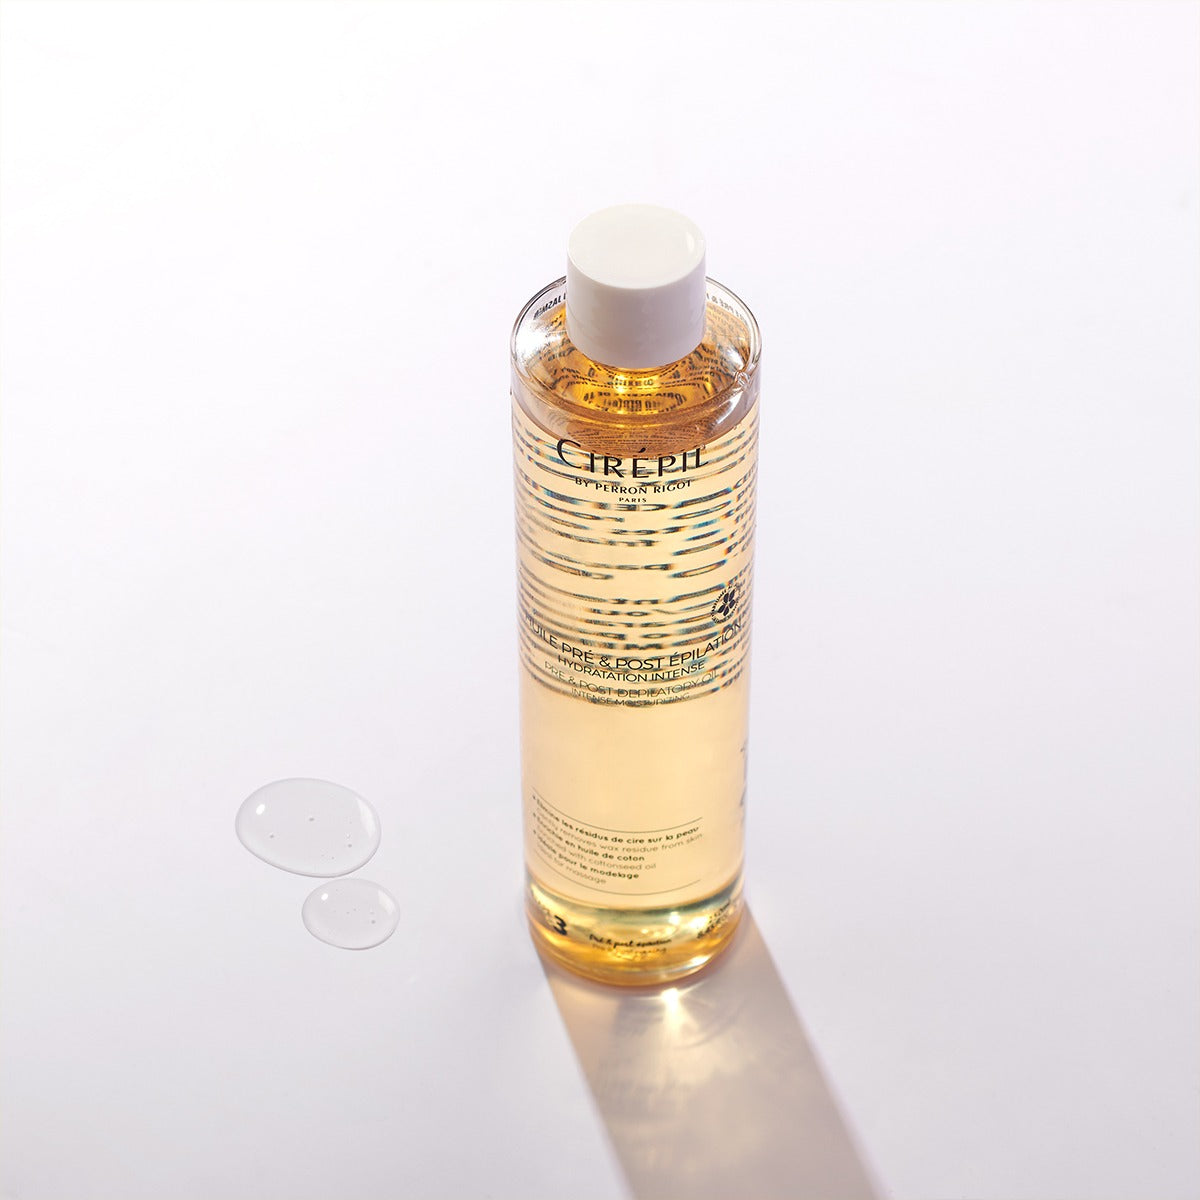 Cirepil Huile Pre Et Post Epilation (Jasmin fragrance oil ) (250 ml)